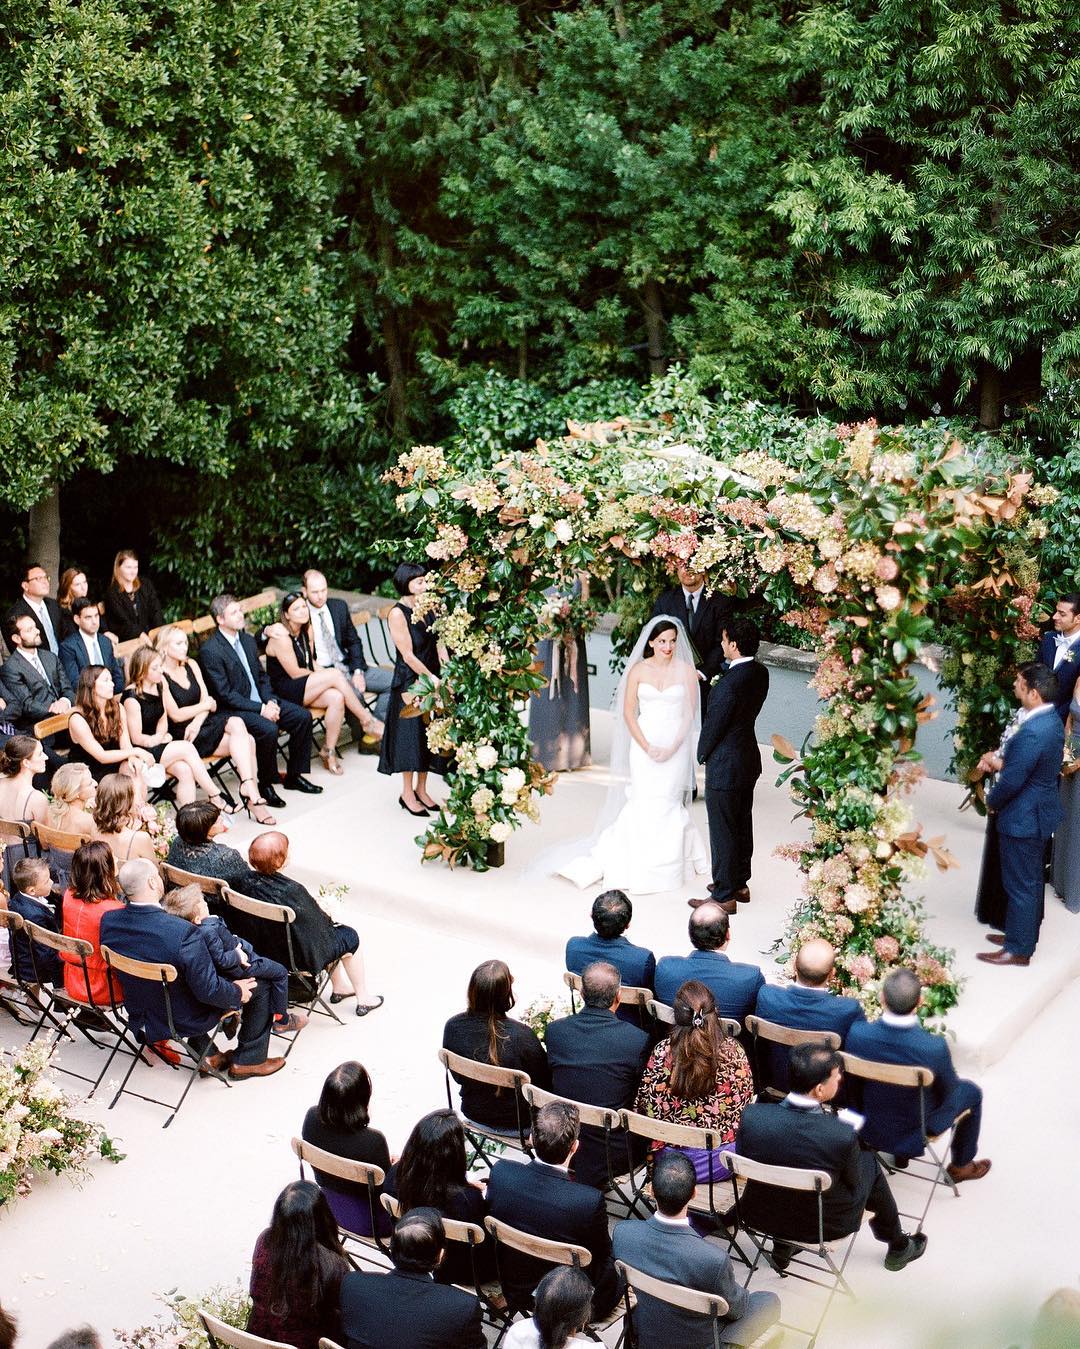 Fall Wedding Ceremony Decor Ideas Seasonal Blooms